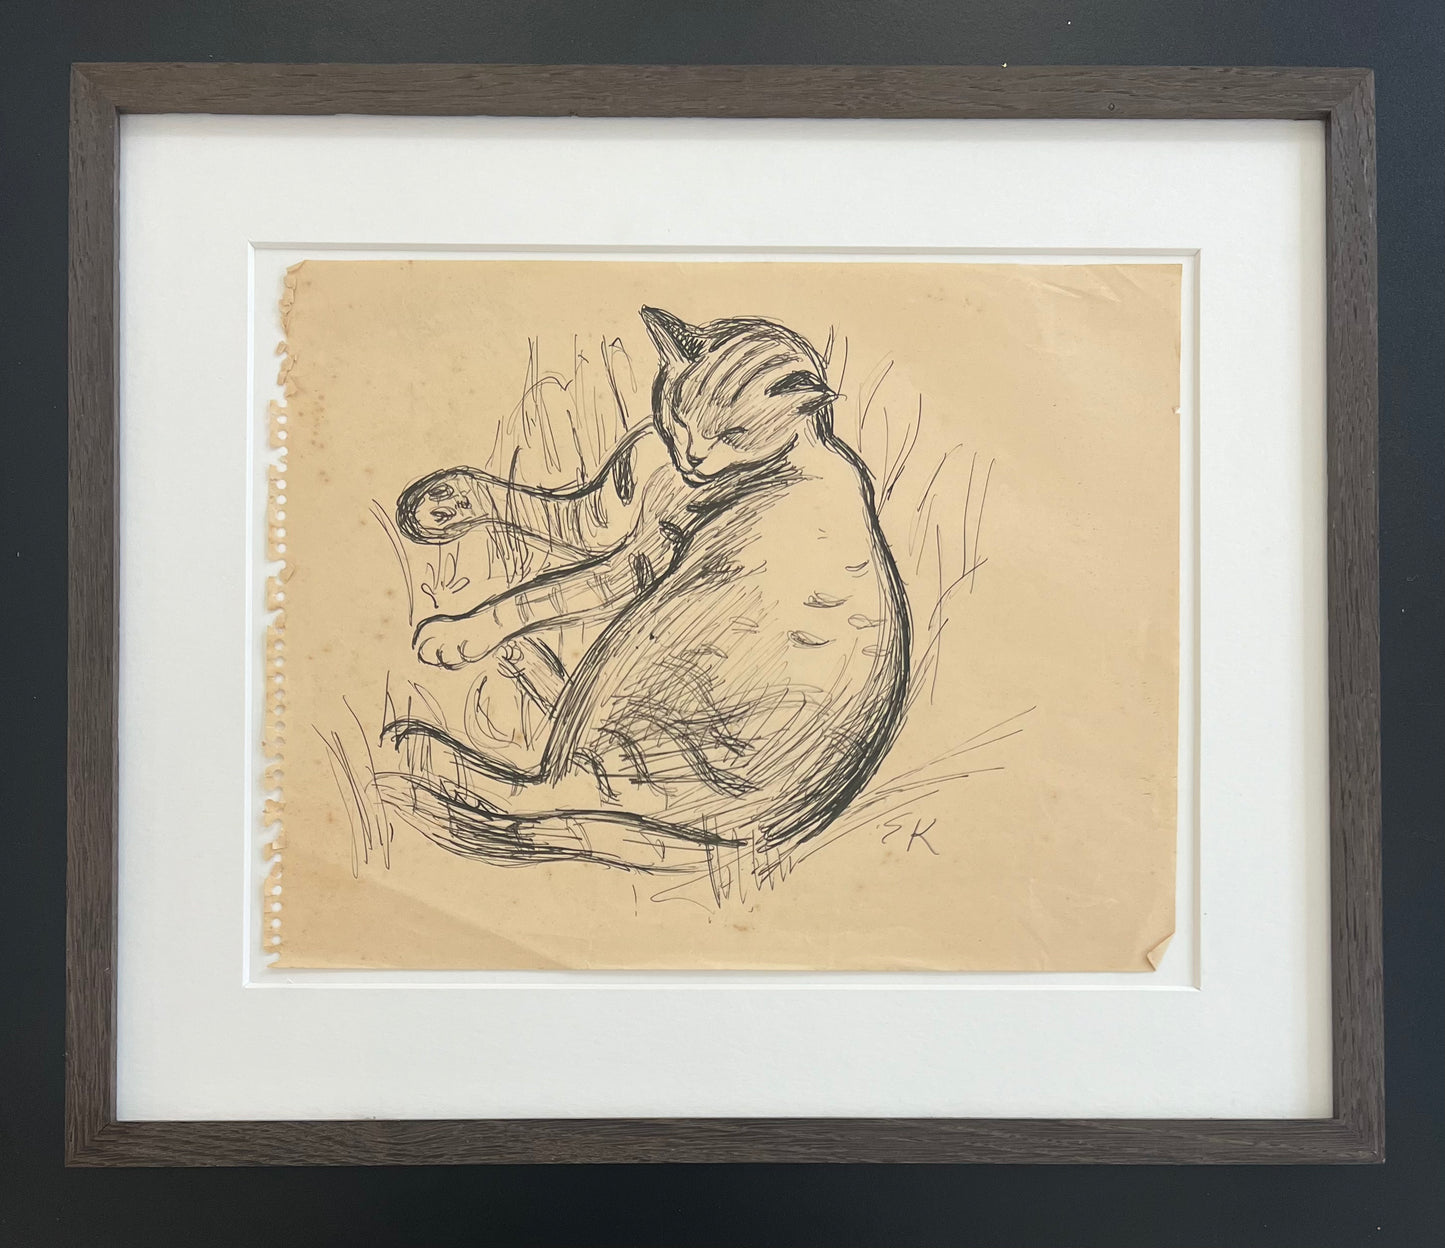 Elisabeth Karlinsky. Study of a cat